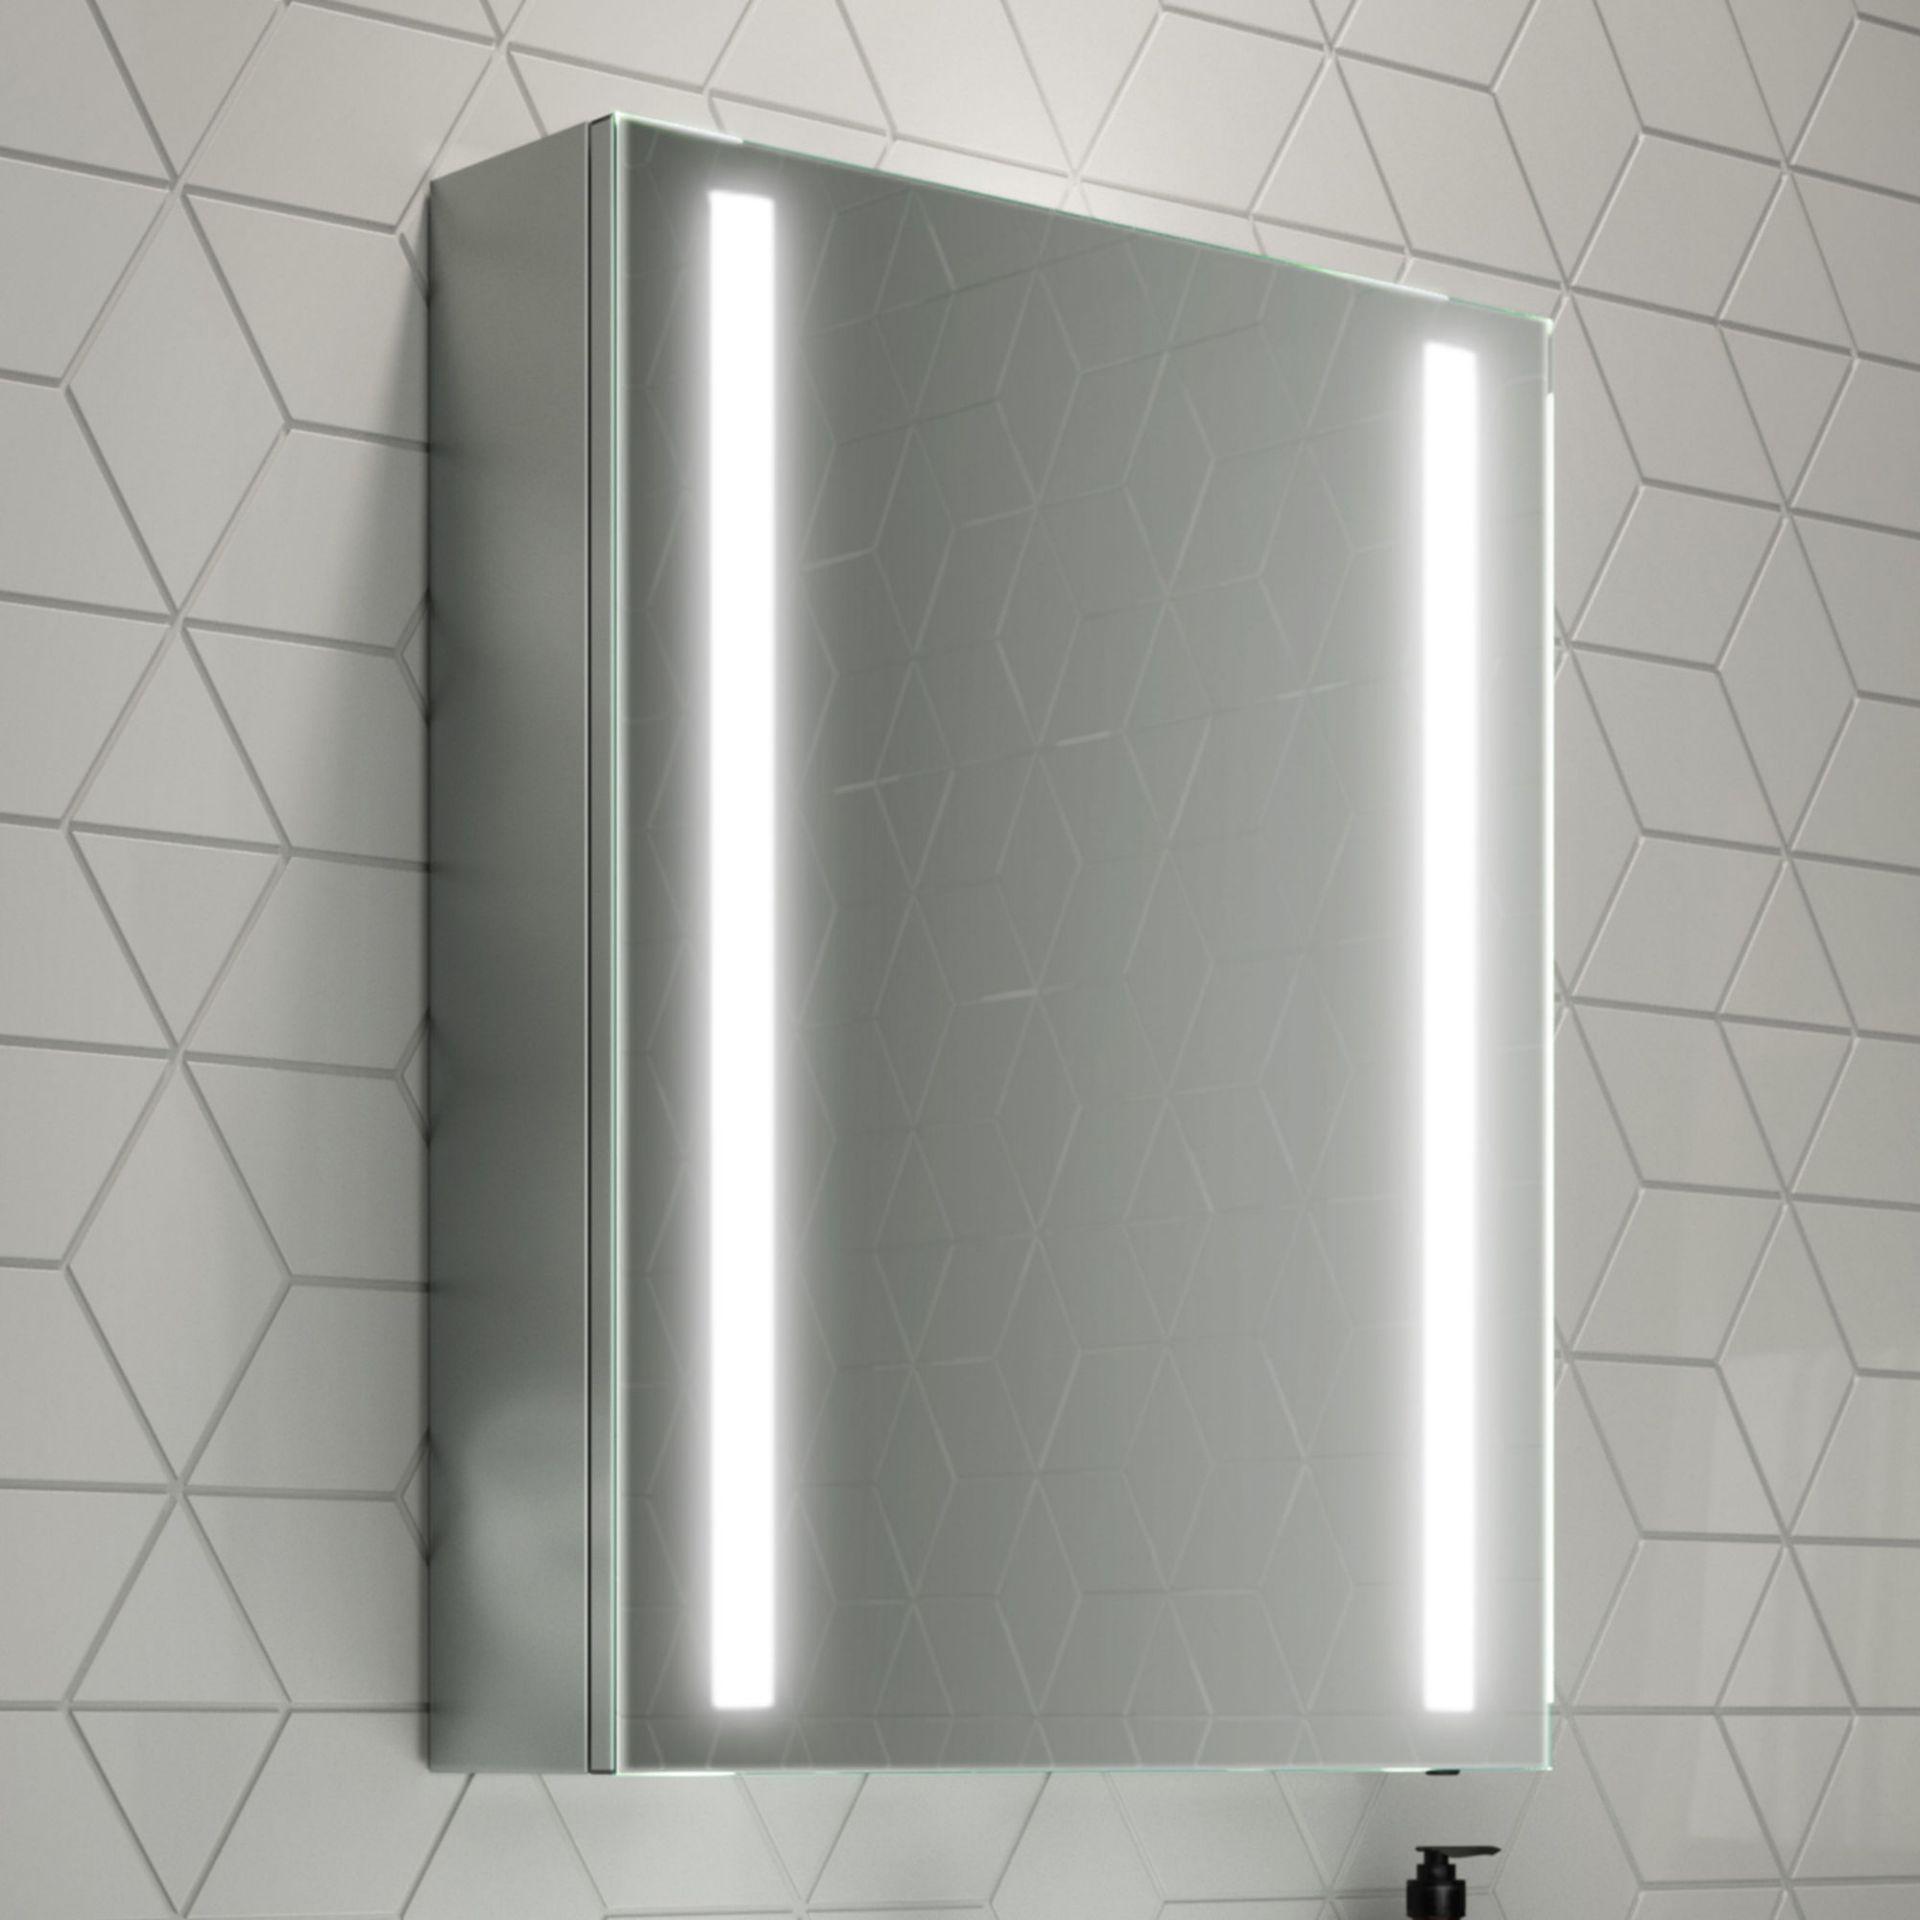 (OS24) 500x650mm Dawn Illuminated LED Mirror Cabinet. RRP £399.99. Energy efficient LED lighting,